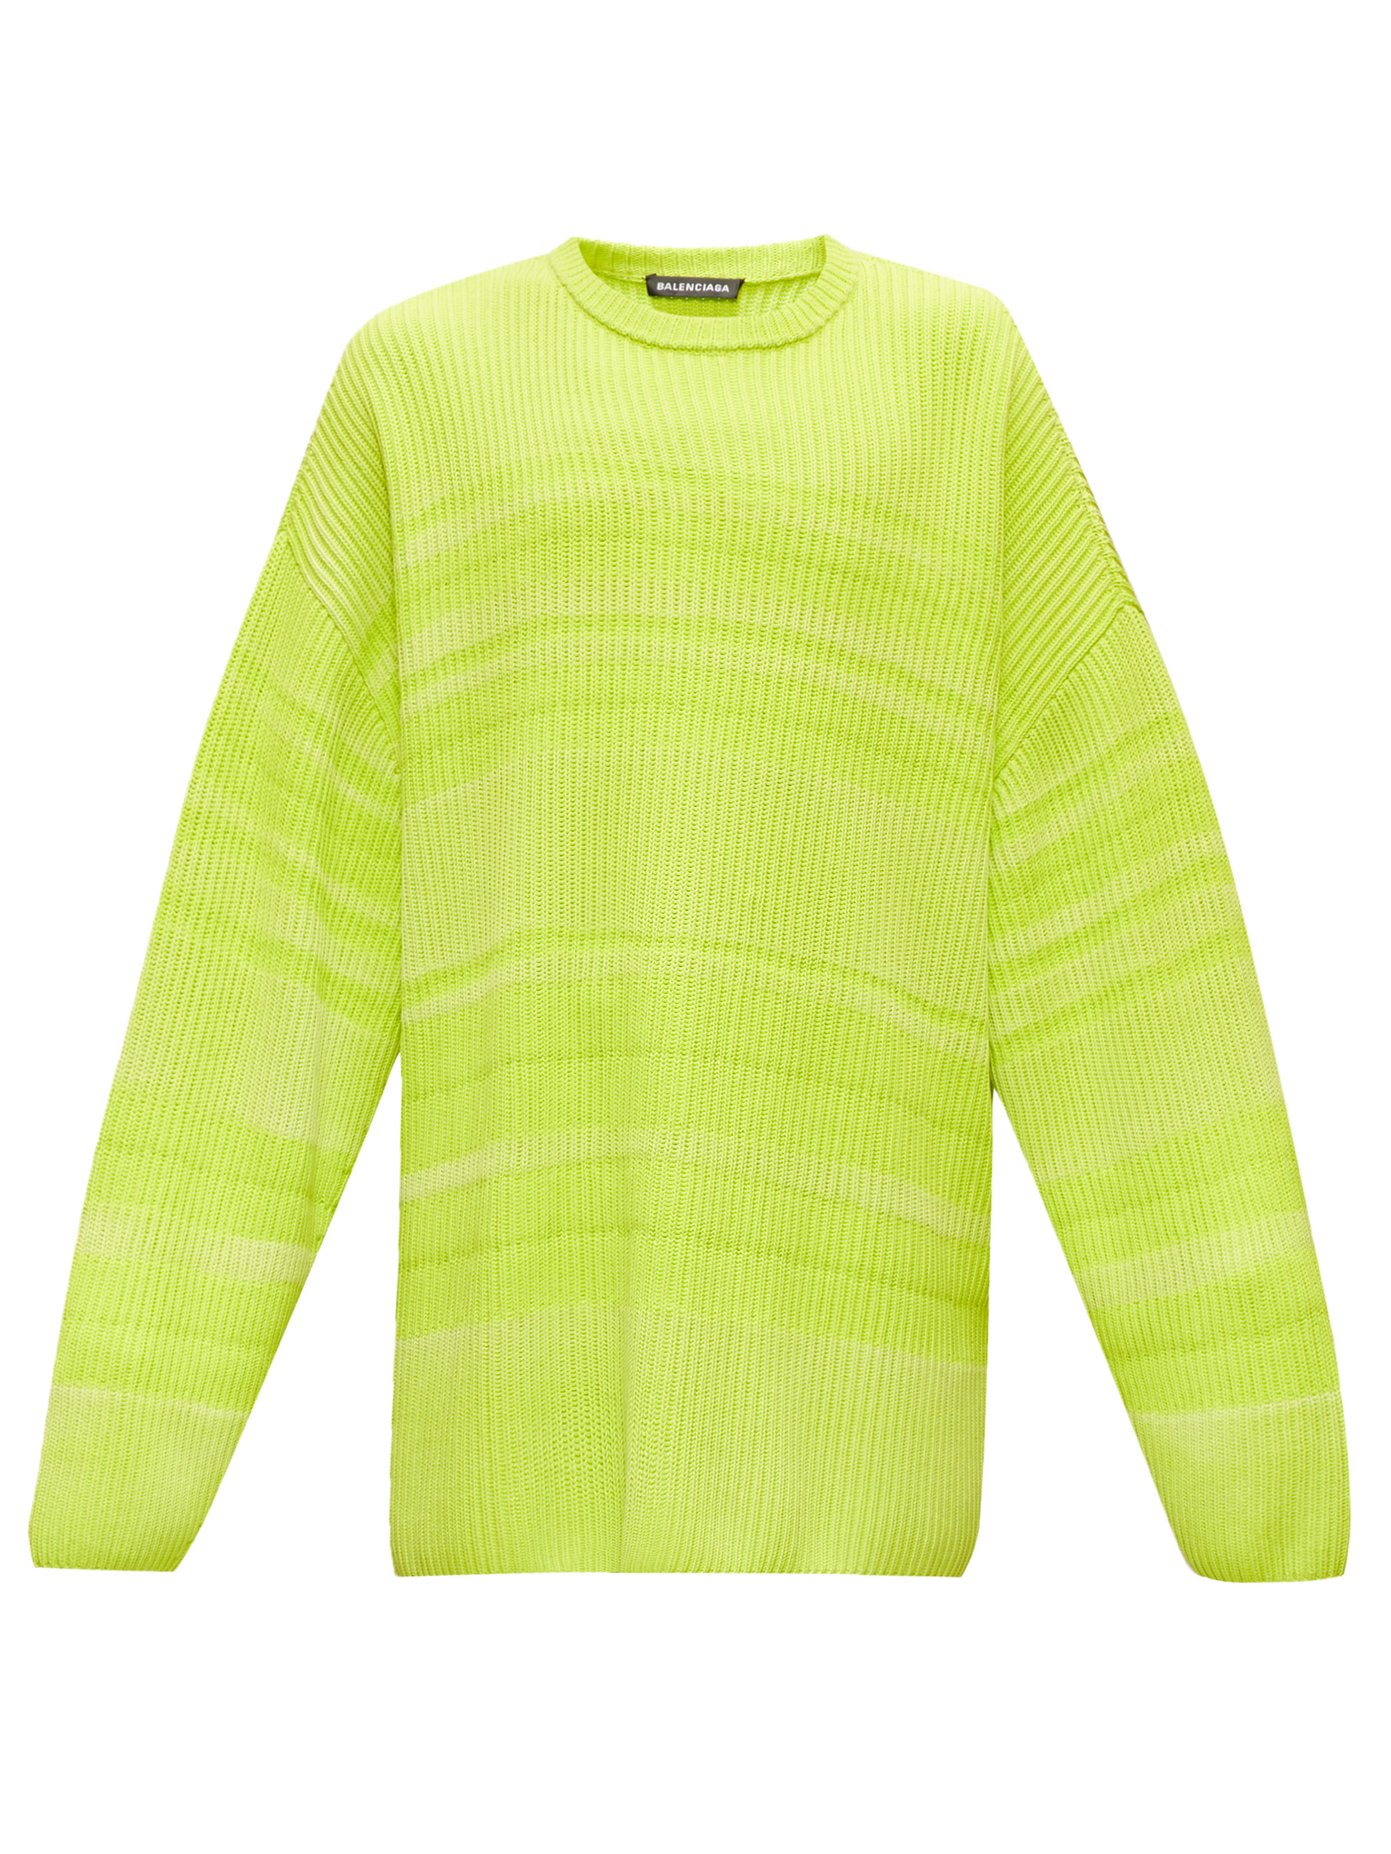 balenciaga yellow sweater